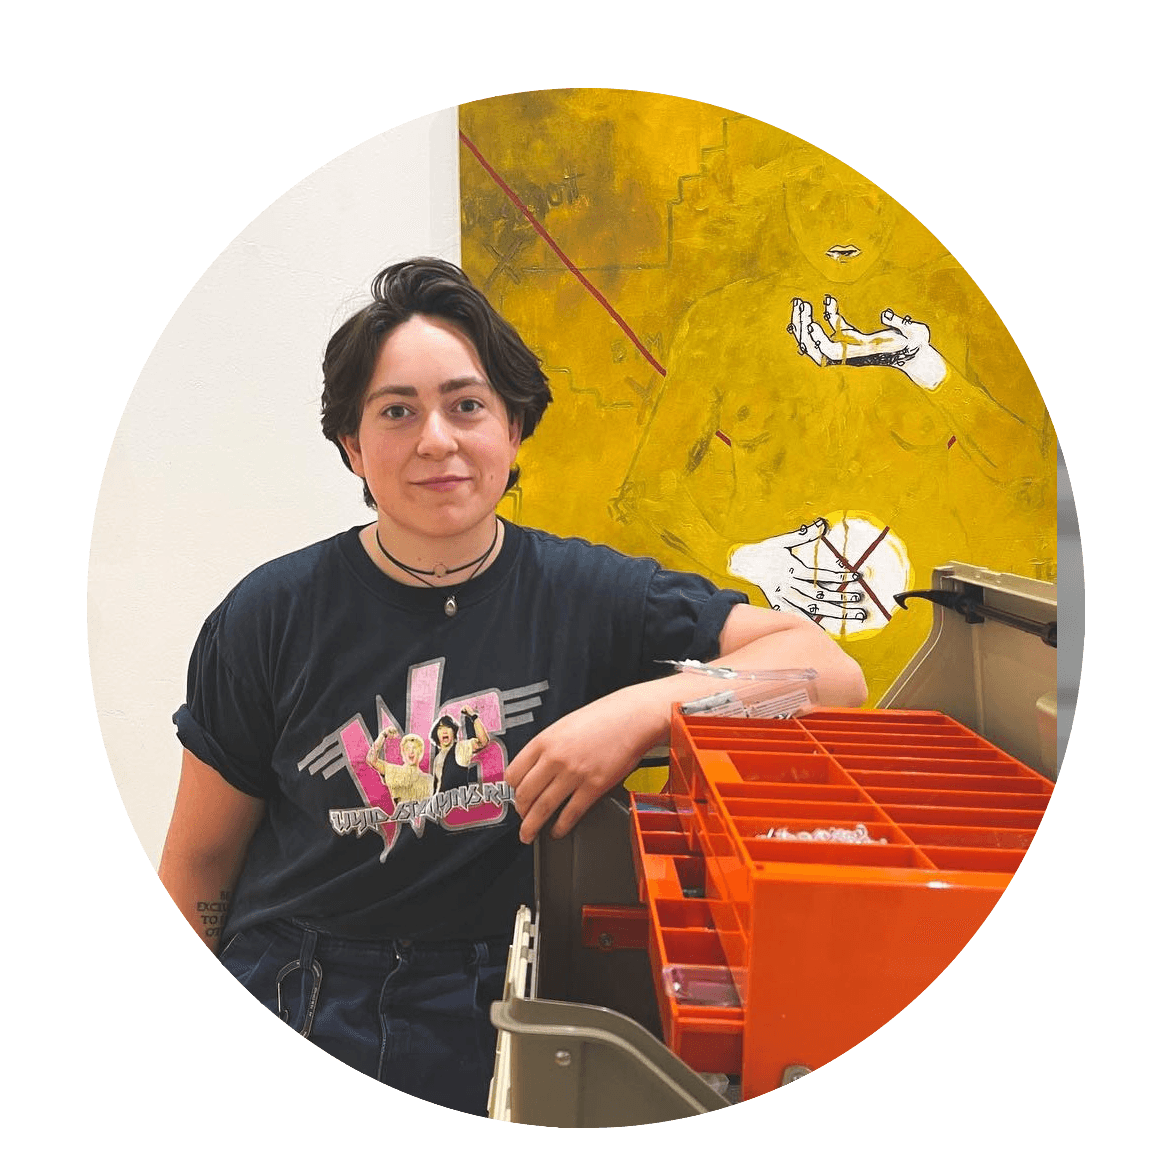 DELANEY WASCHEROL | Gallery & Print Shop Assistant